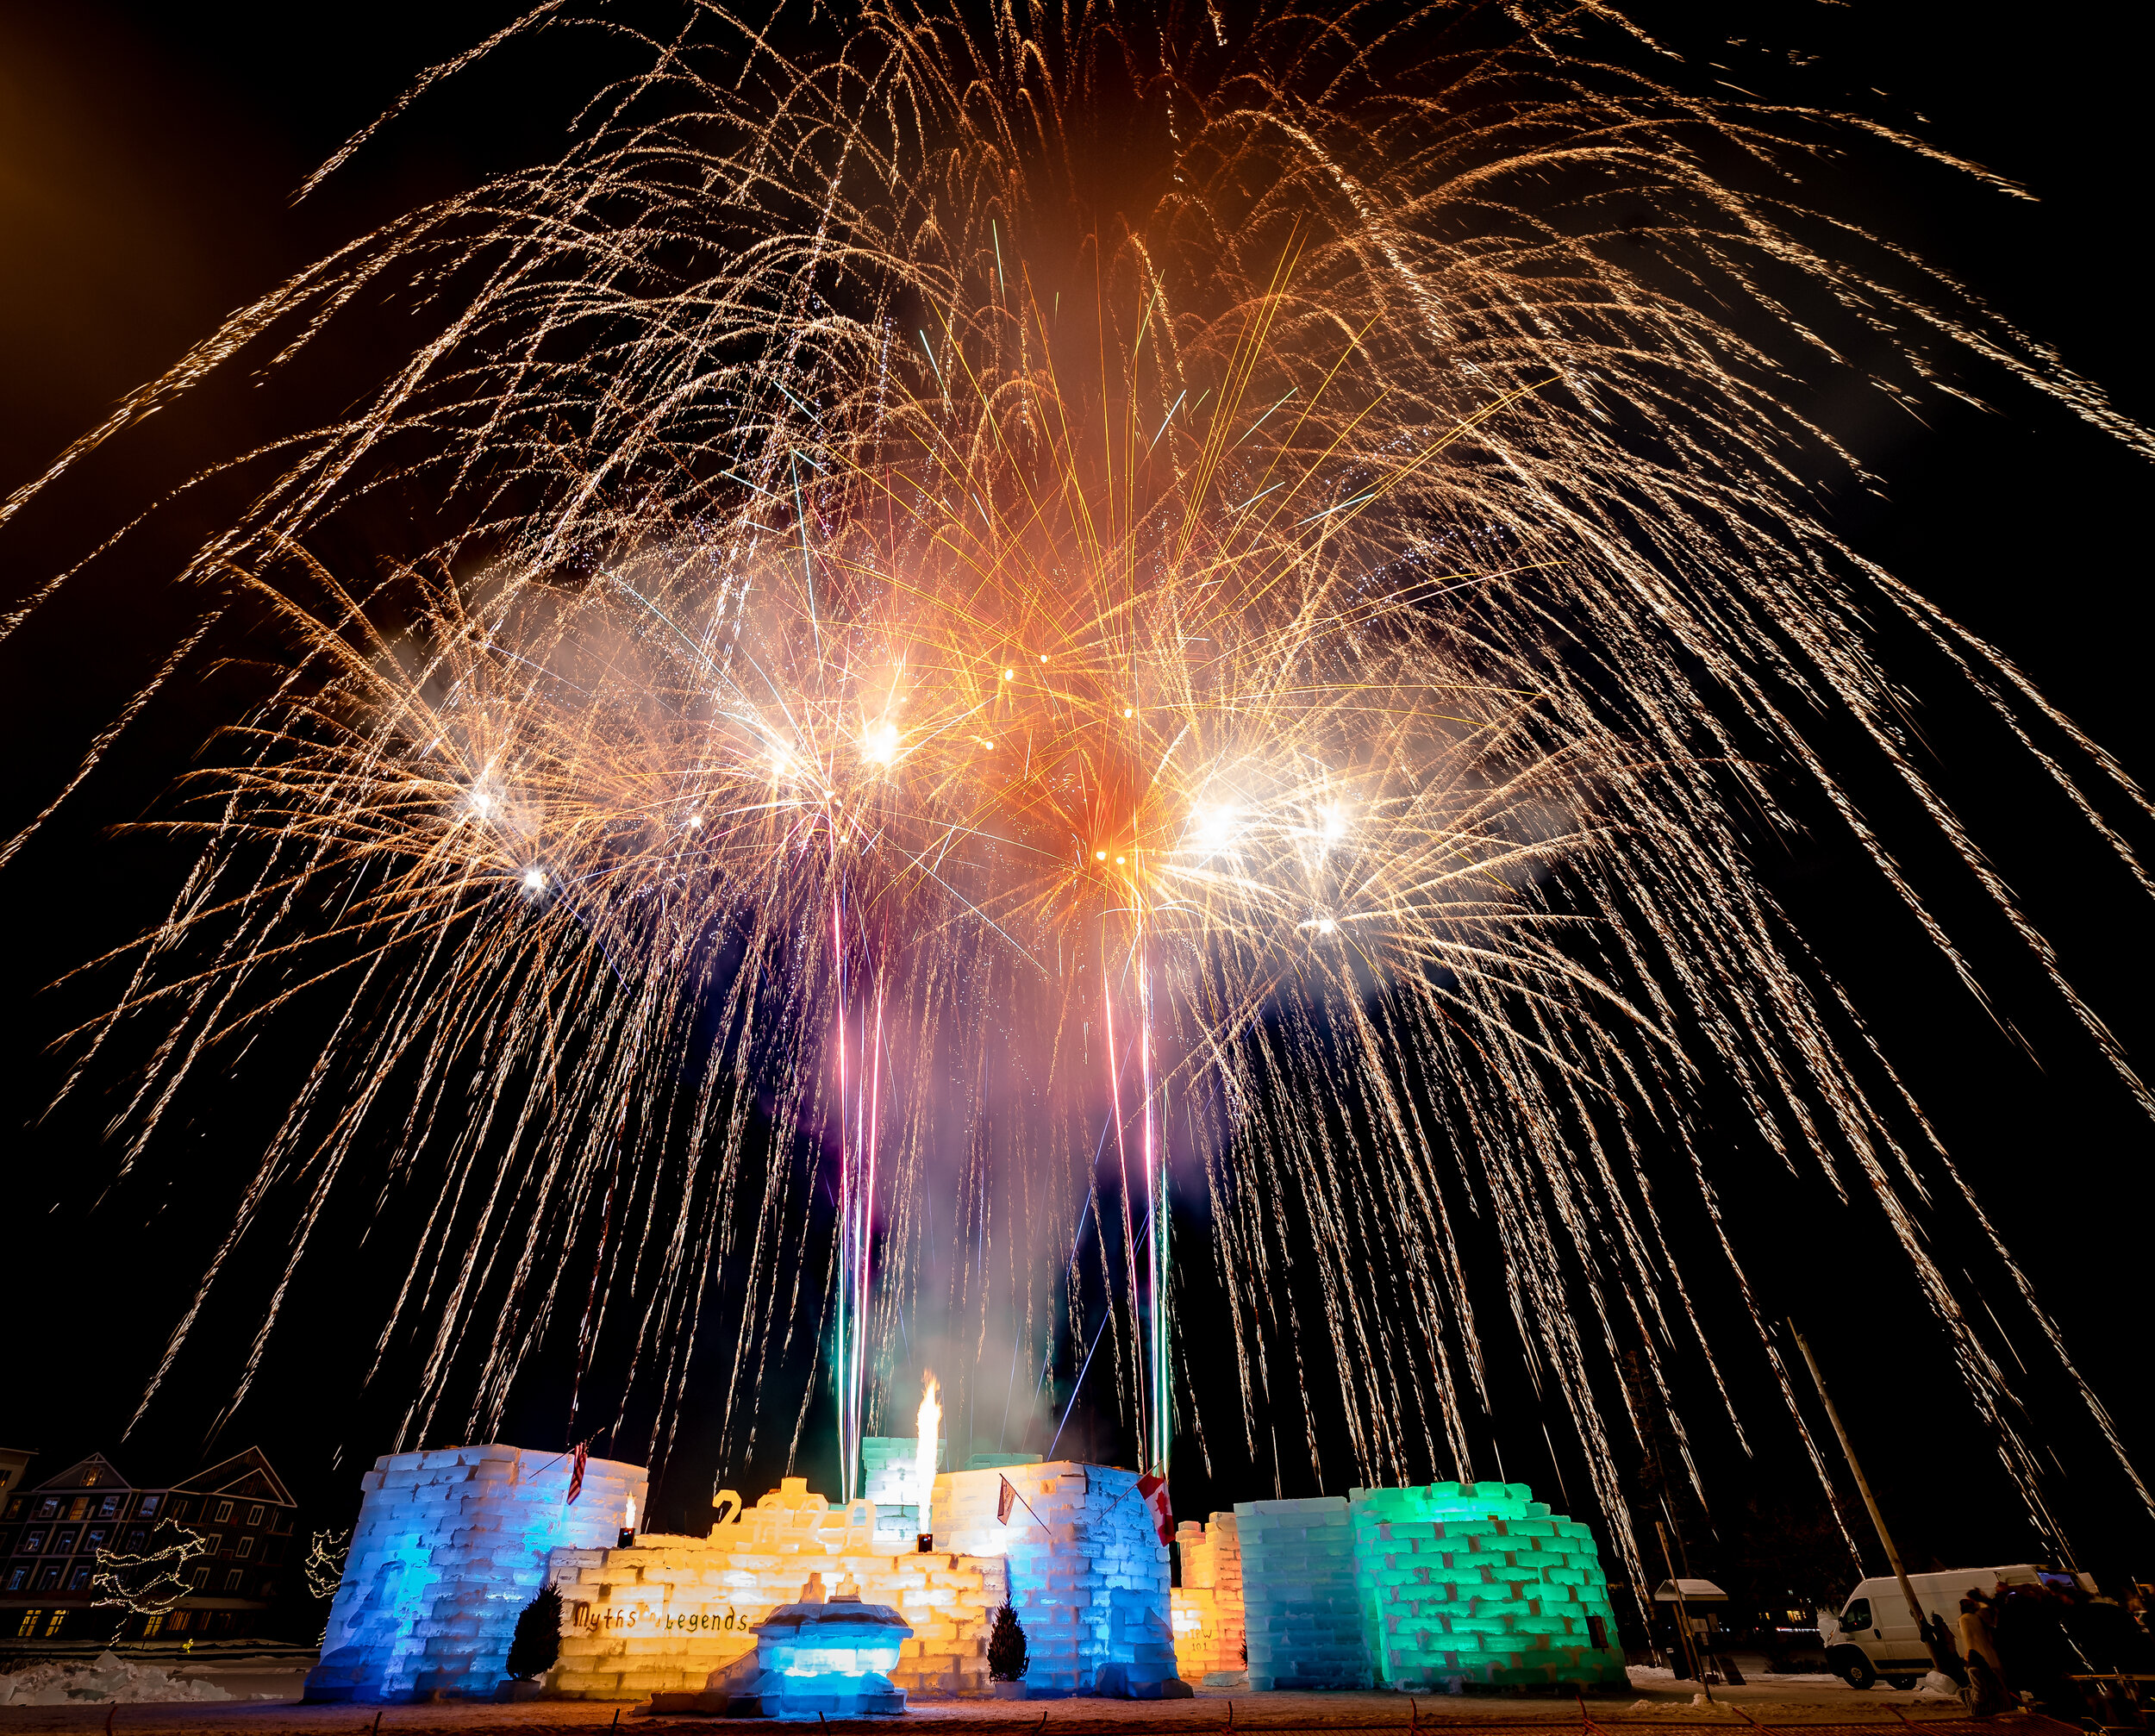 Saranac Lake Winter Carnival Fireworks Show